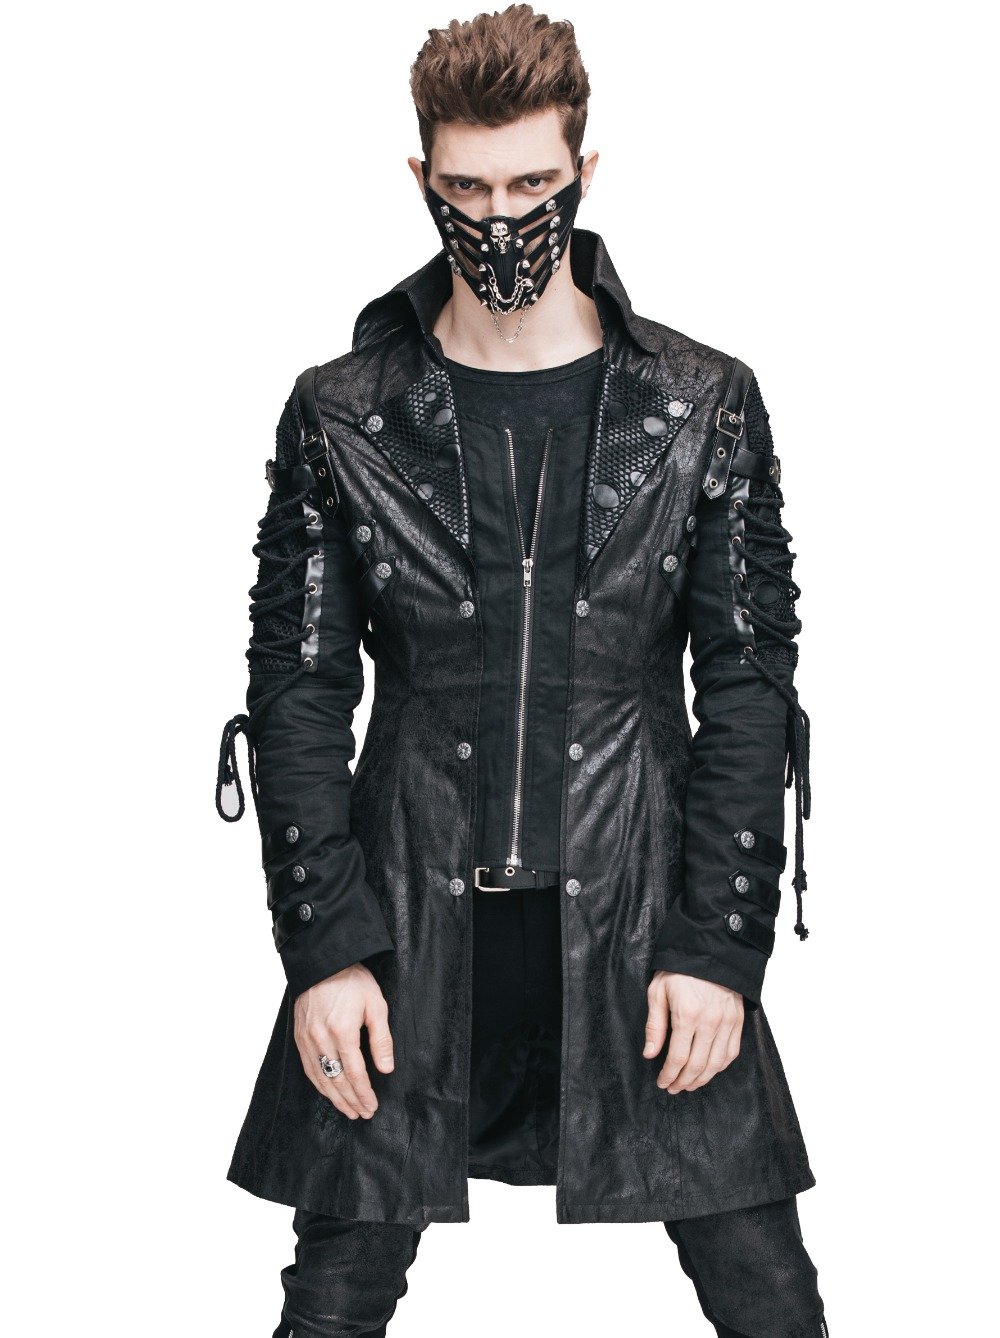 Cyberpunk clothes brands фото 6